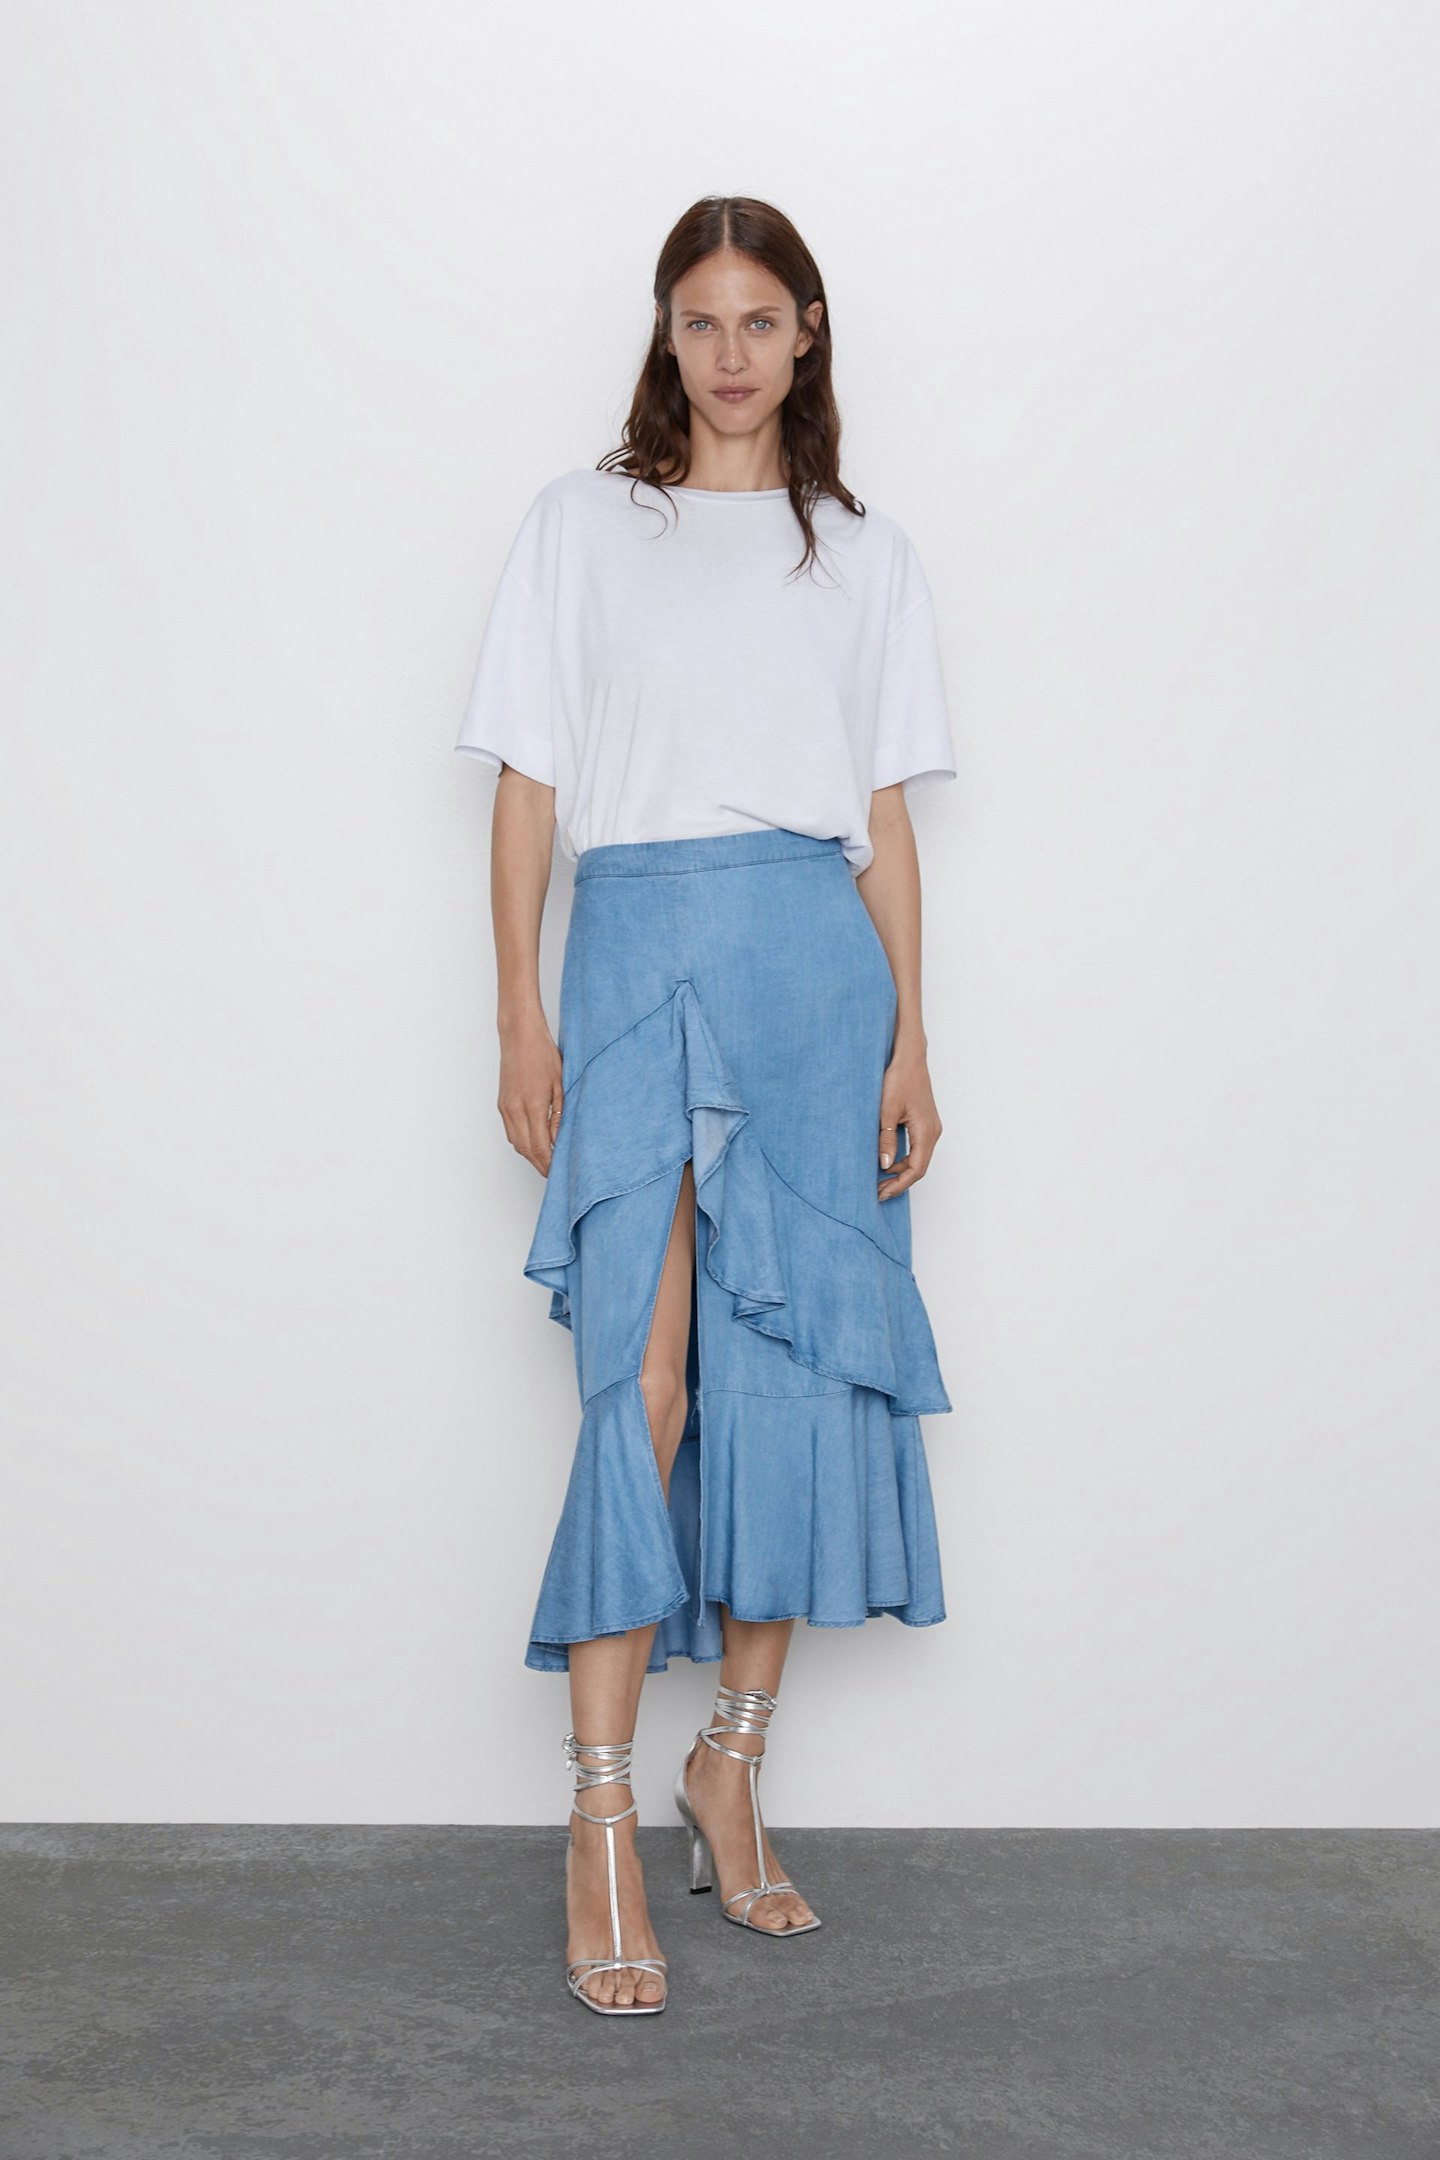 Zara skirt with frills